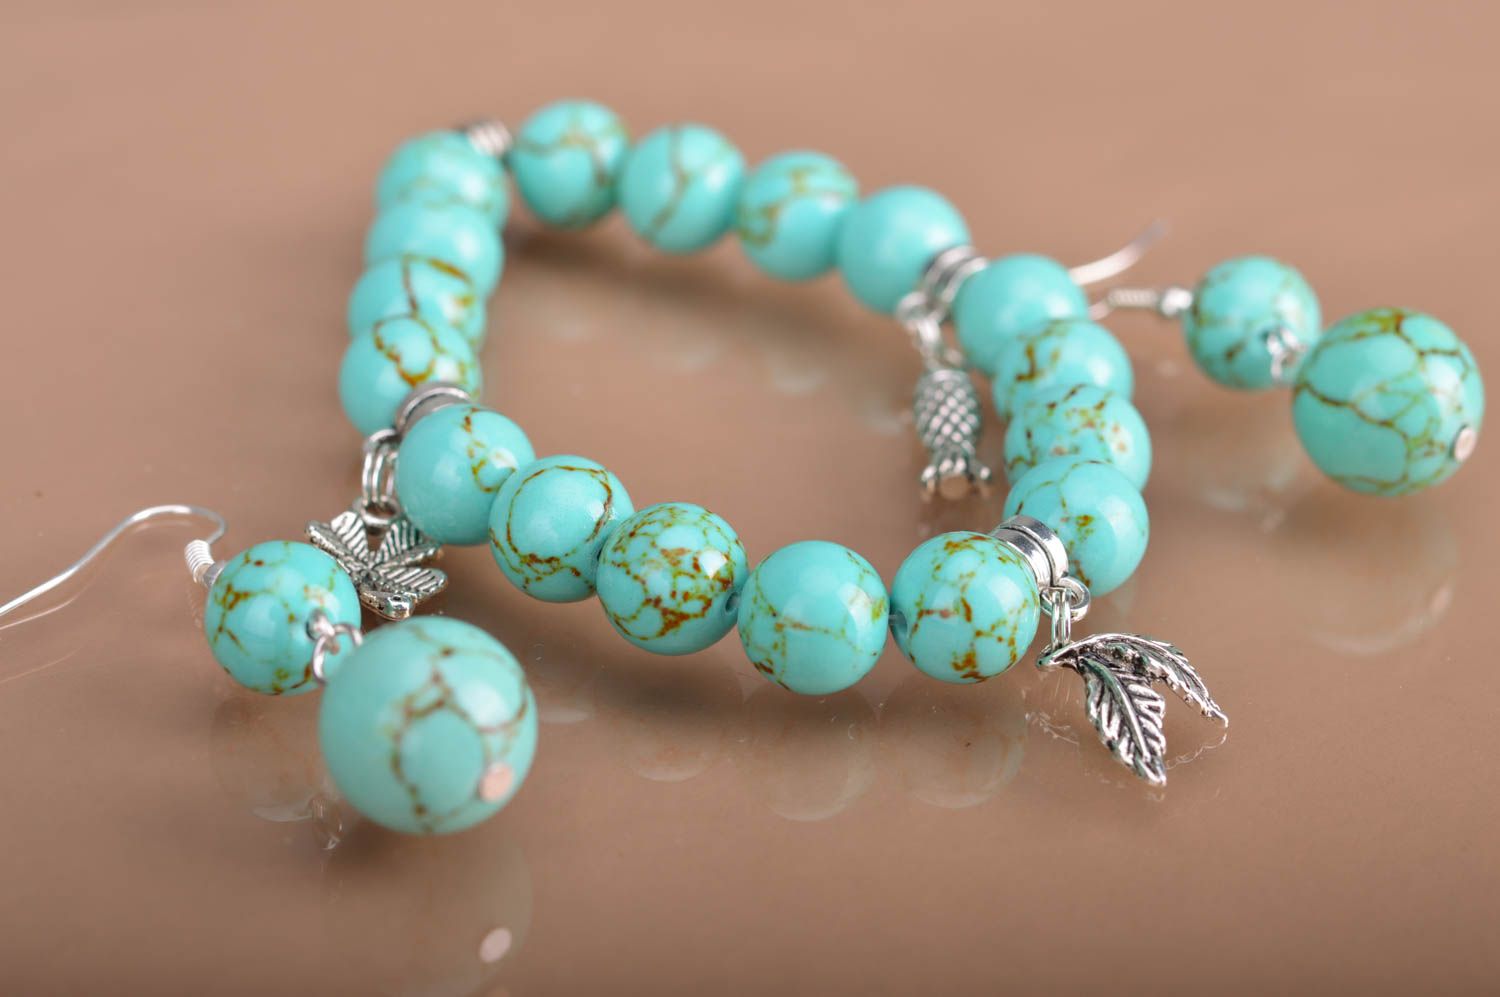 Handmade turquoise beaded jewelry set wrist bracelet with charms and earrings photo 3